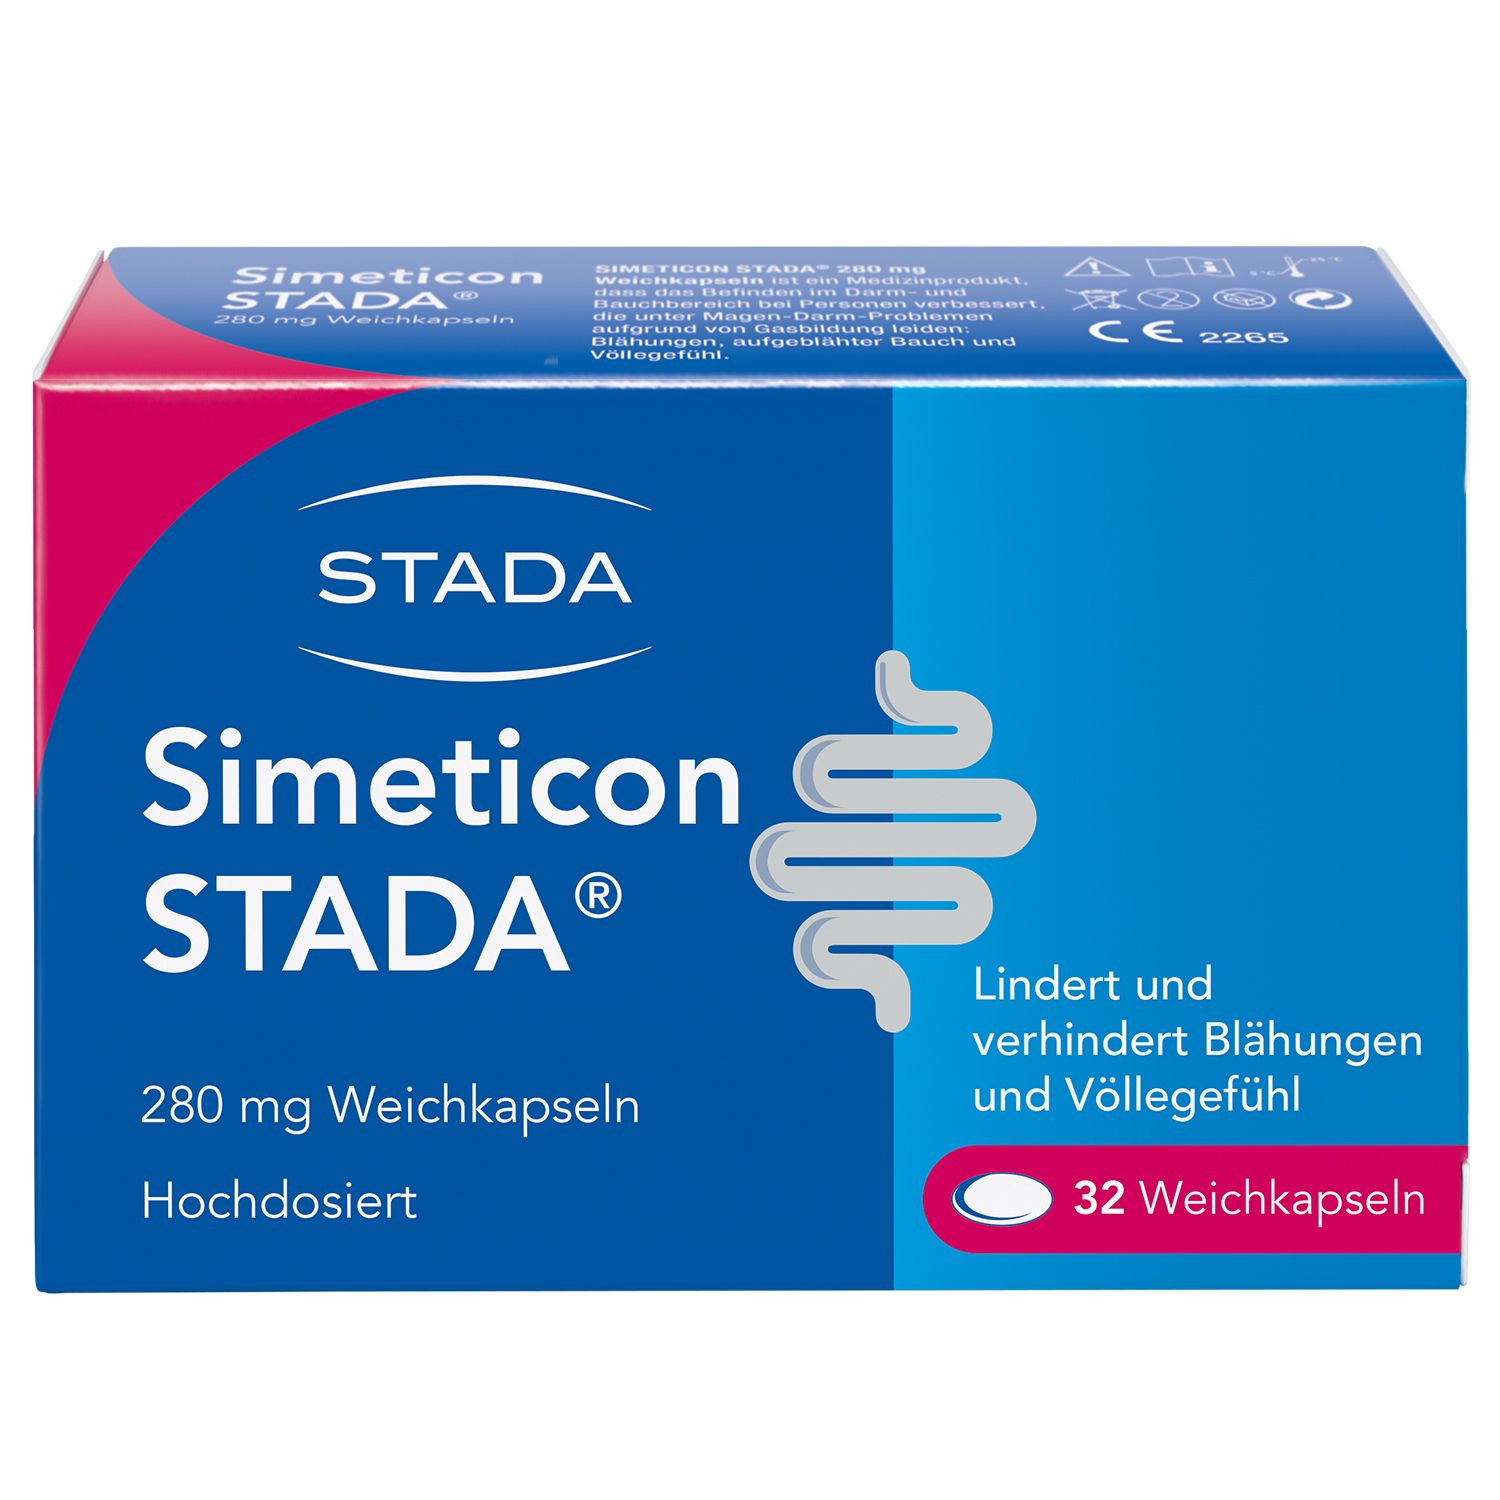 Simeticon Stada® 280 mg